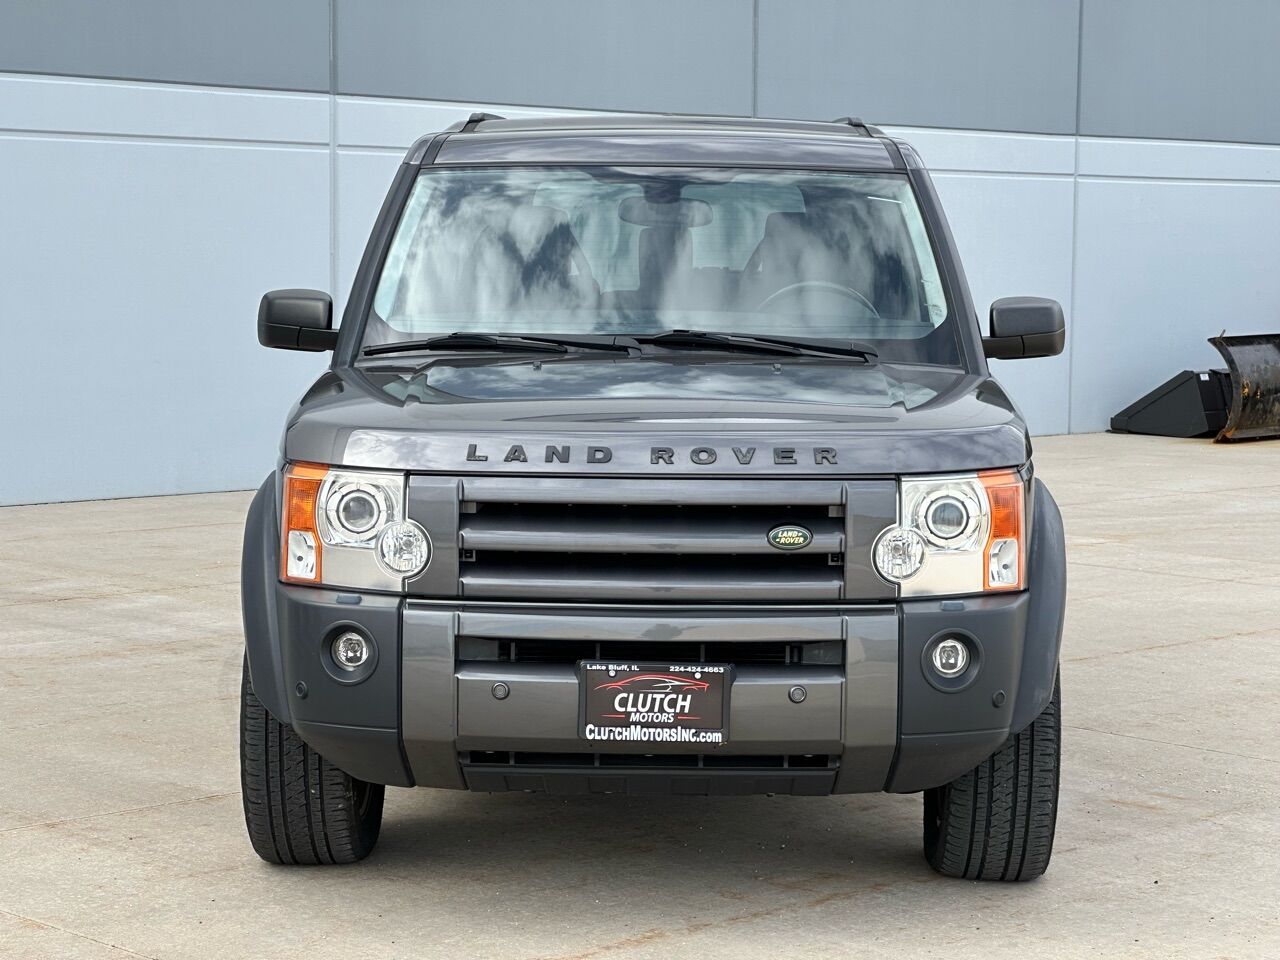 Land Rover LR3 For Sale - Carsforsale.com®